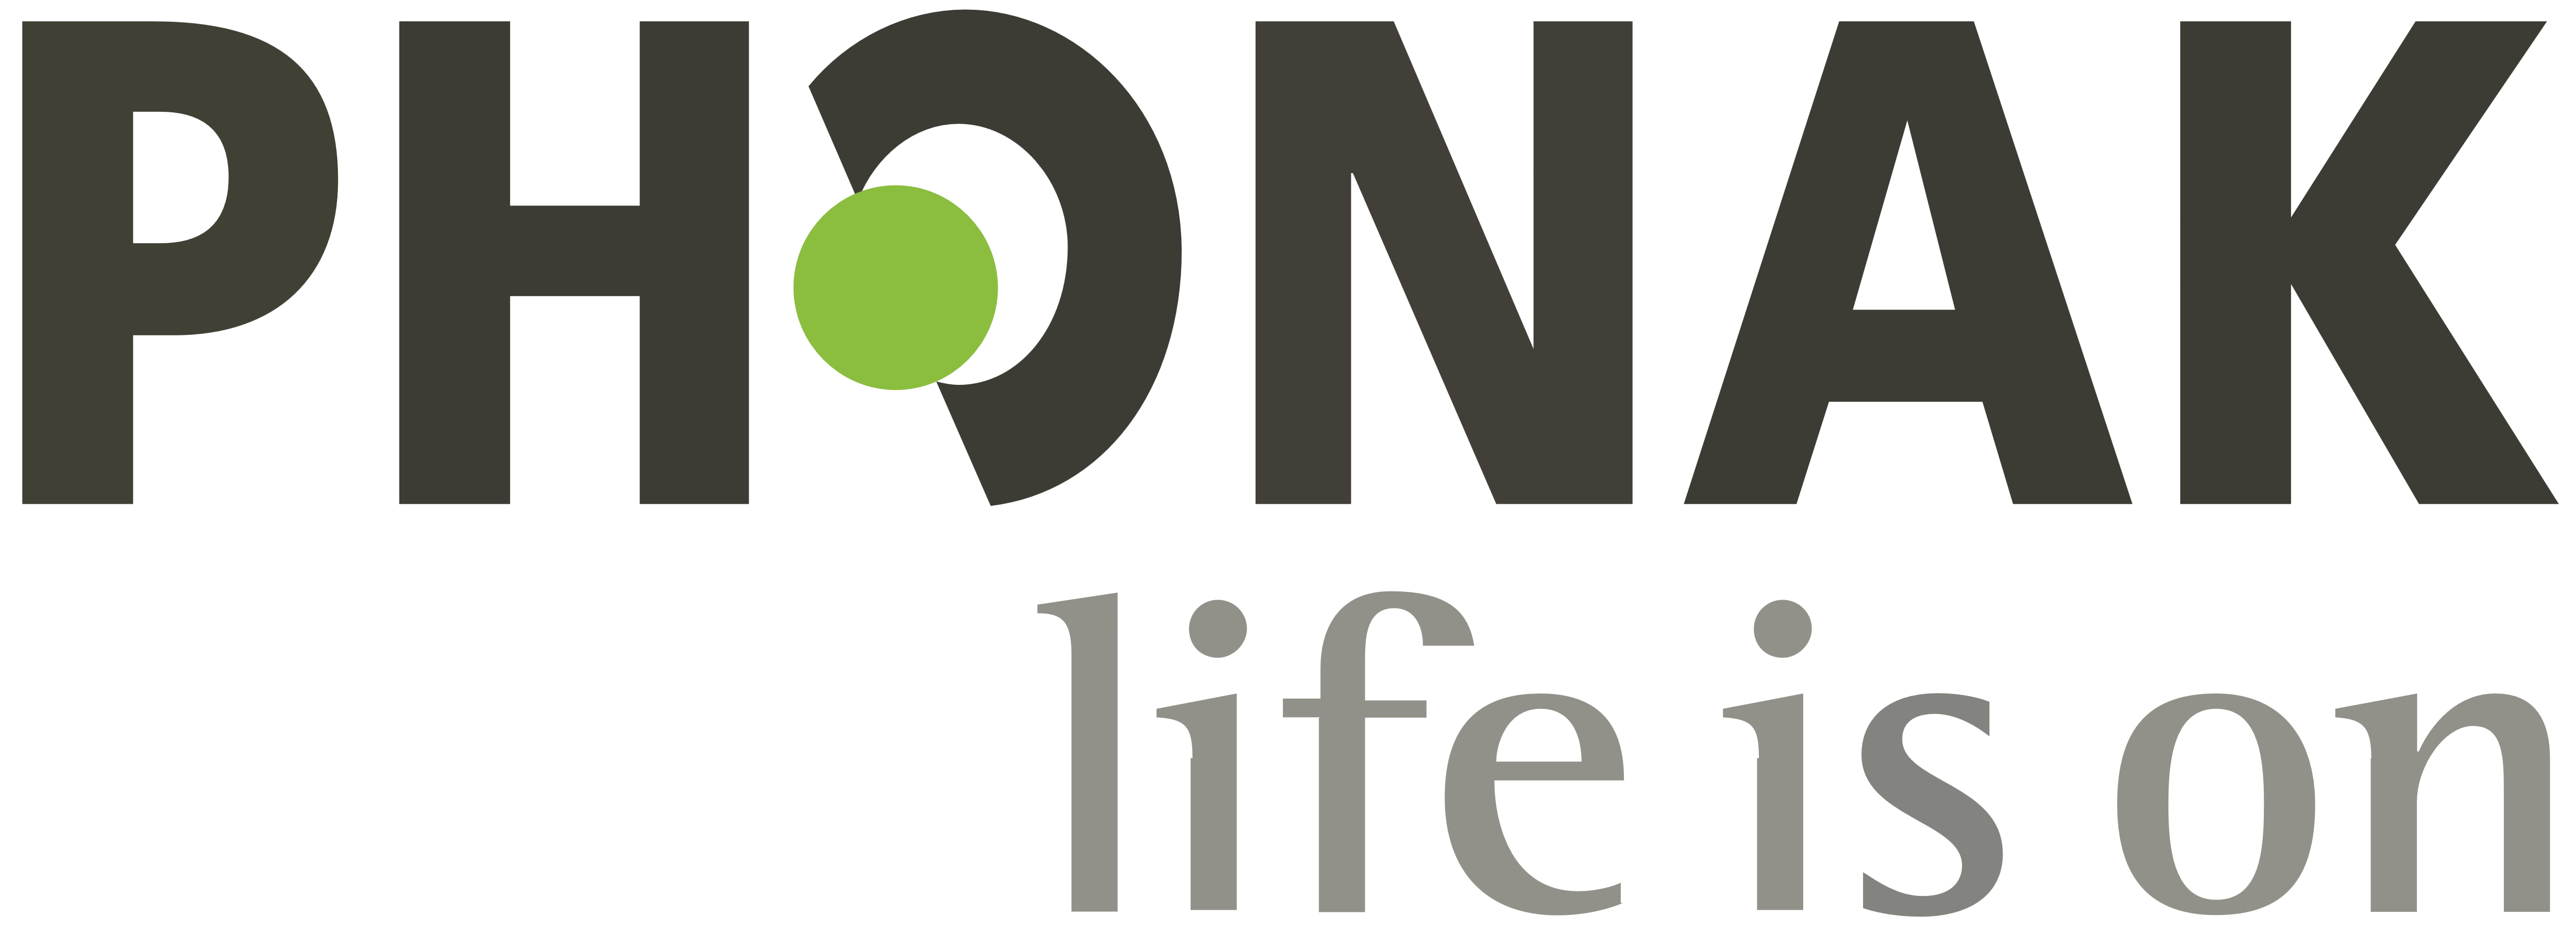 phonak - logo